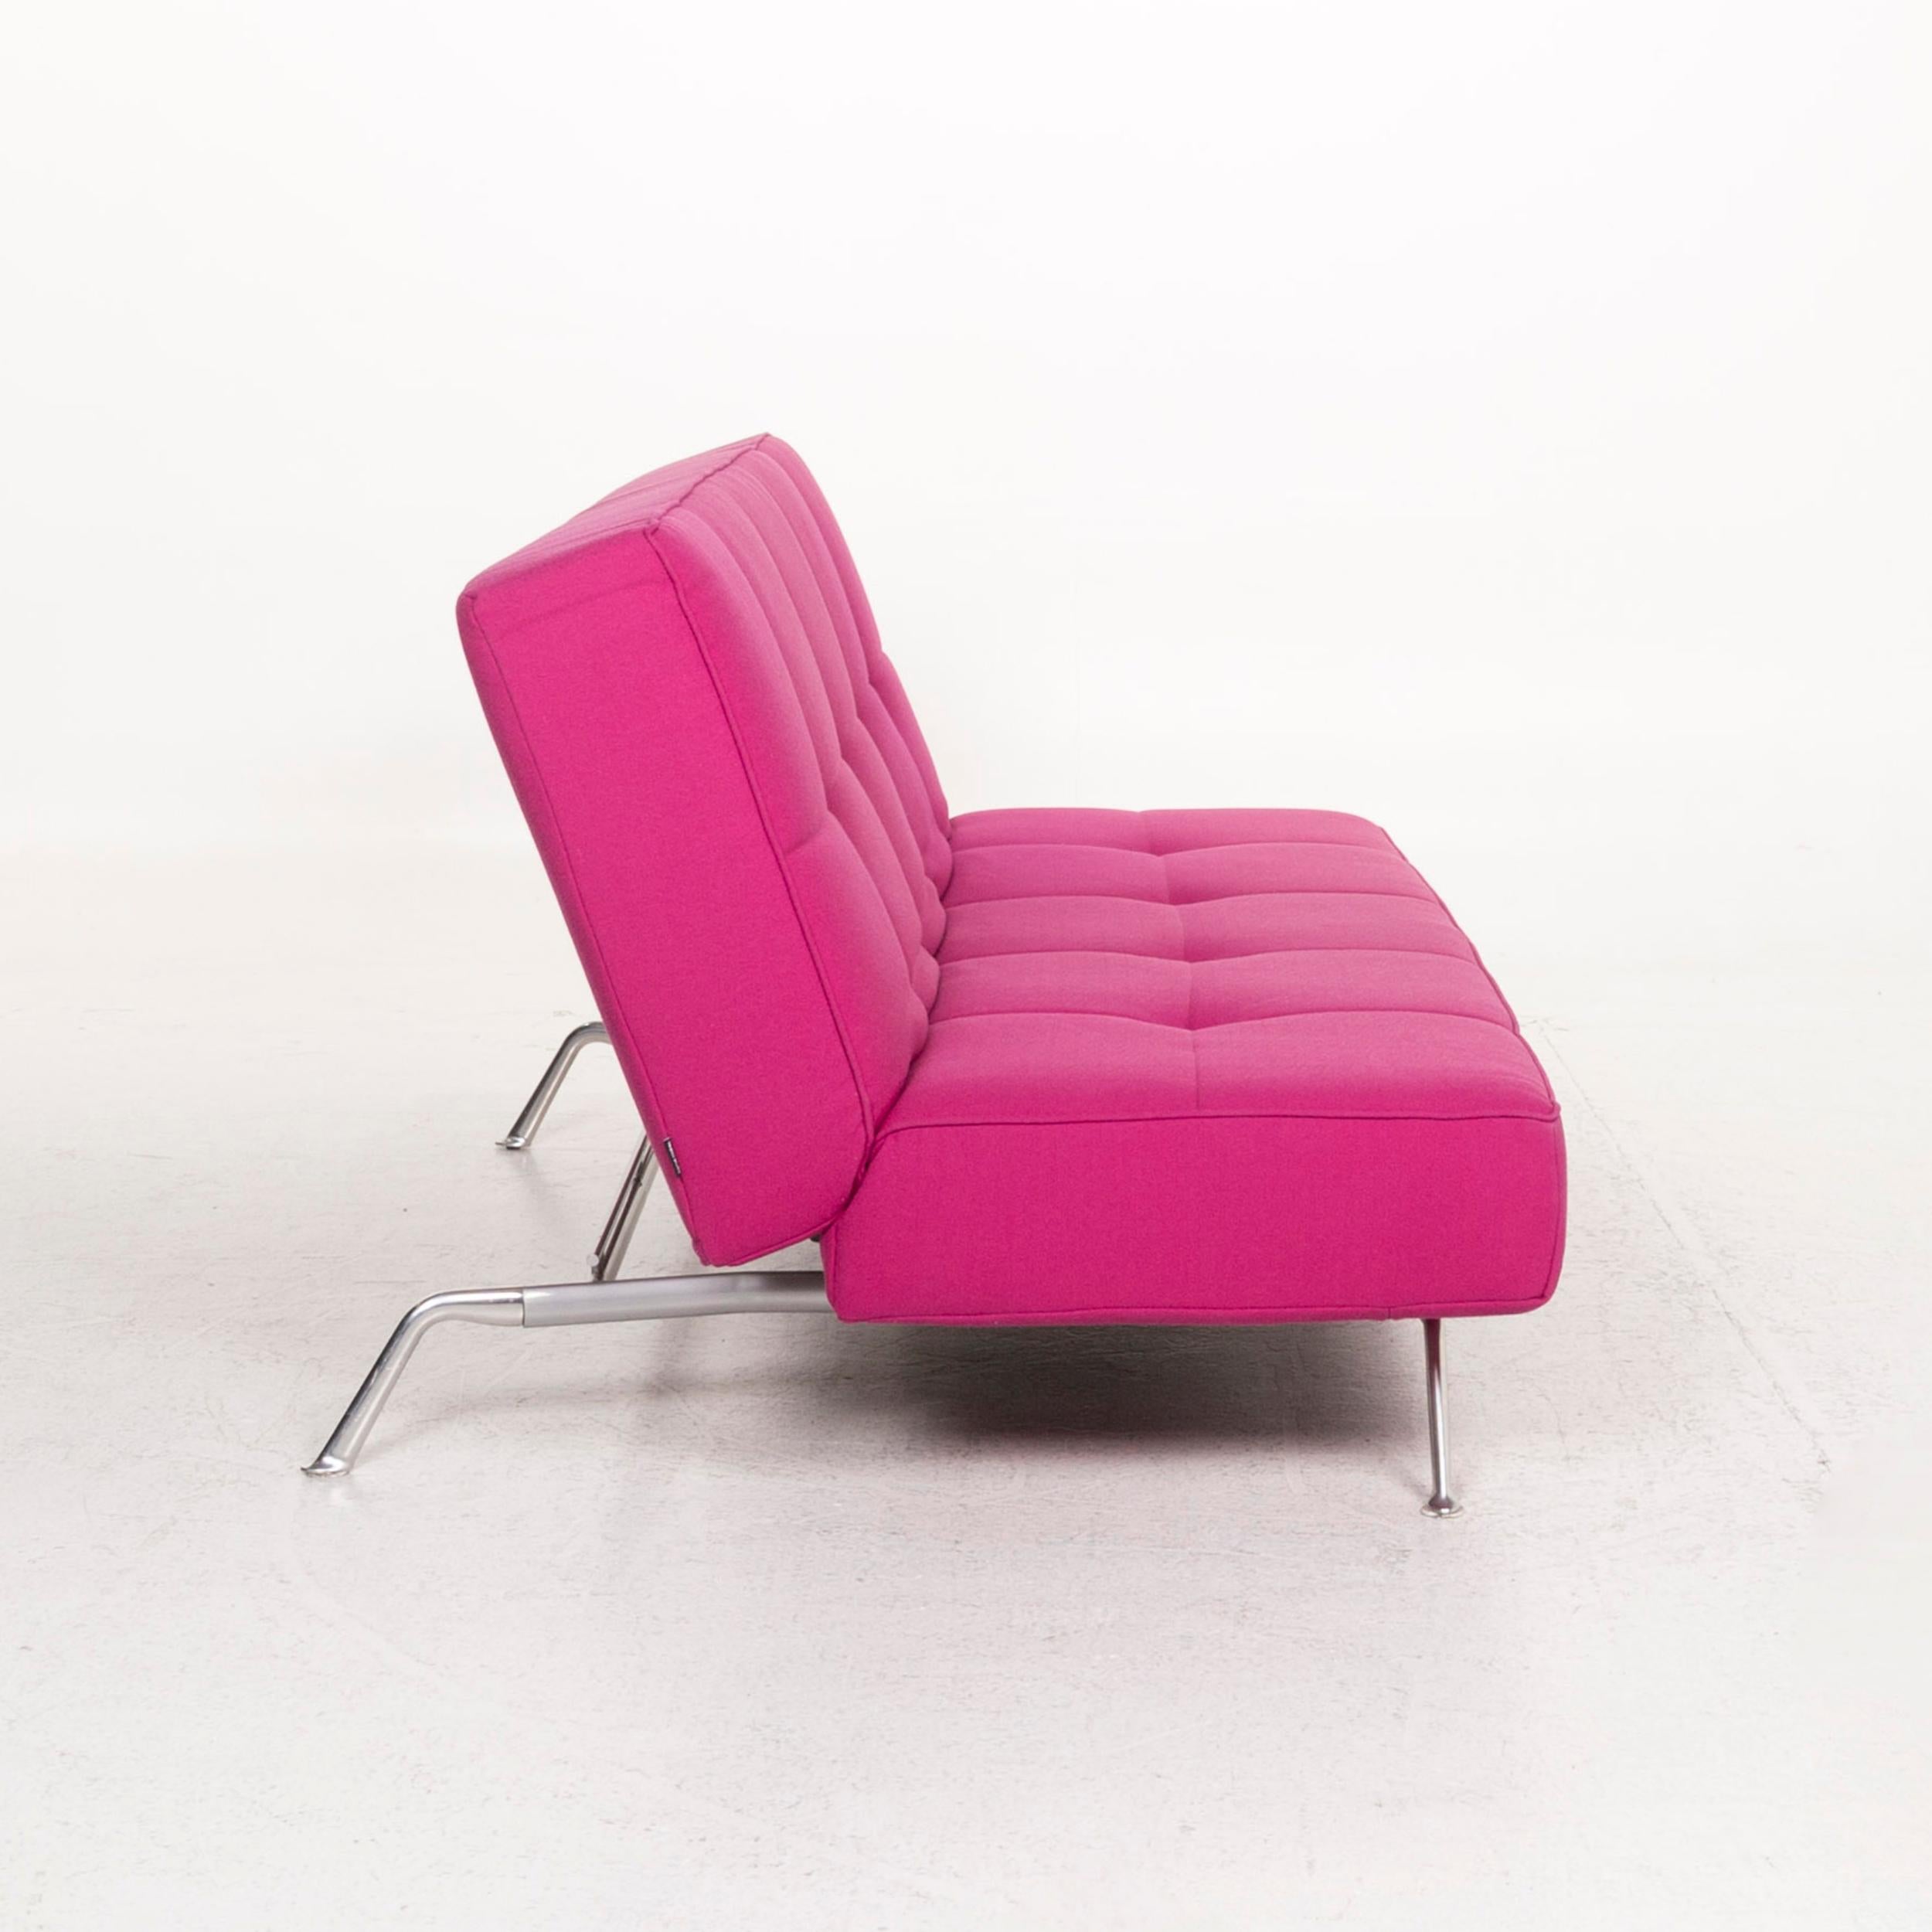 Contemporary Ligne Roset Smala Fabric Sofa Pink Three-Seat Sofa Bed Function Sleep